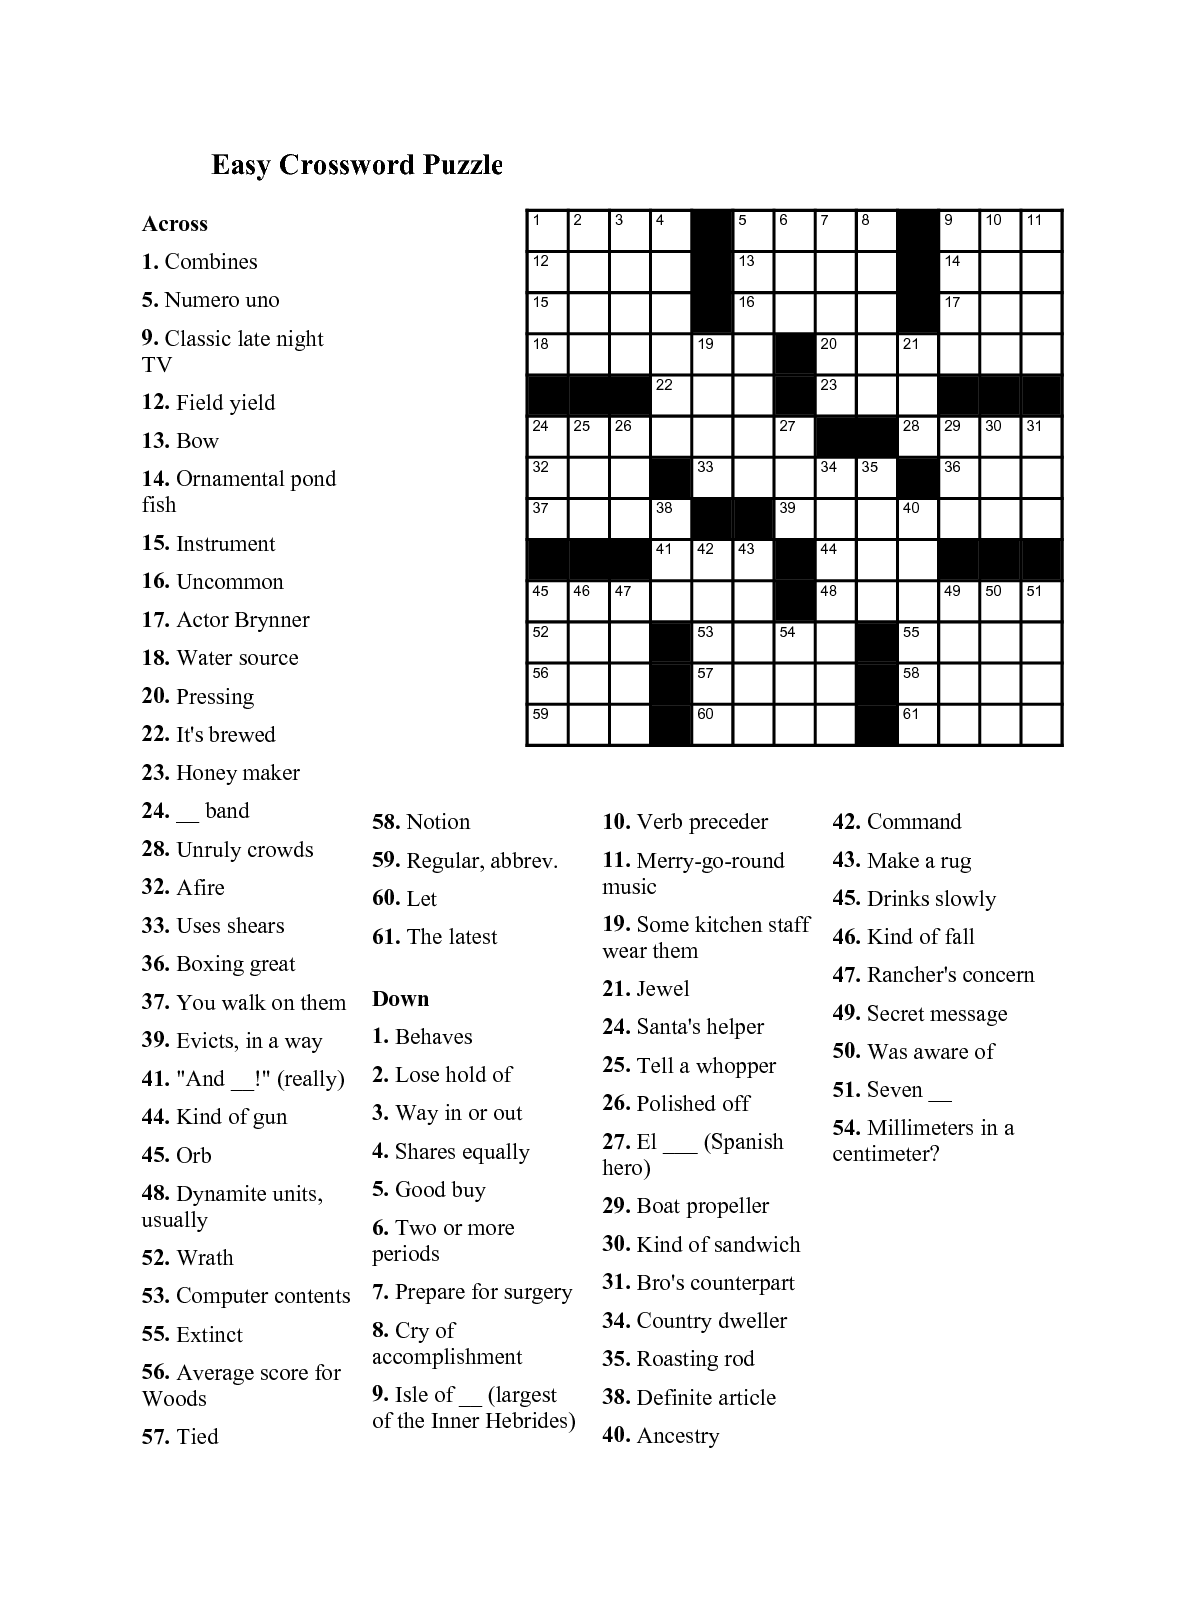 Easy Crossword Puzzles For Seniors Activity Shelter Crossword Puzzles Printable Crossword Puzzles Crossword - Free Online Printable Easy Crossword Puzzles